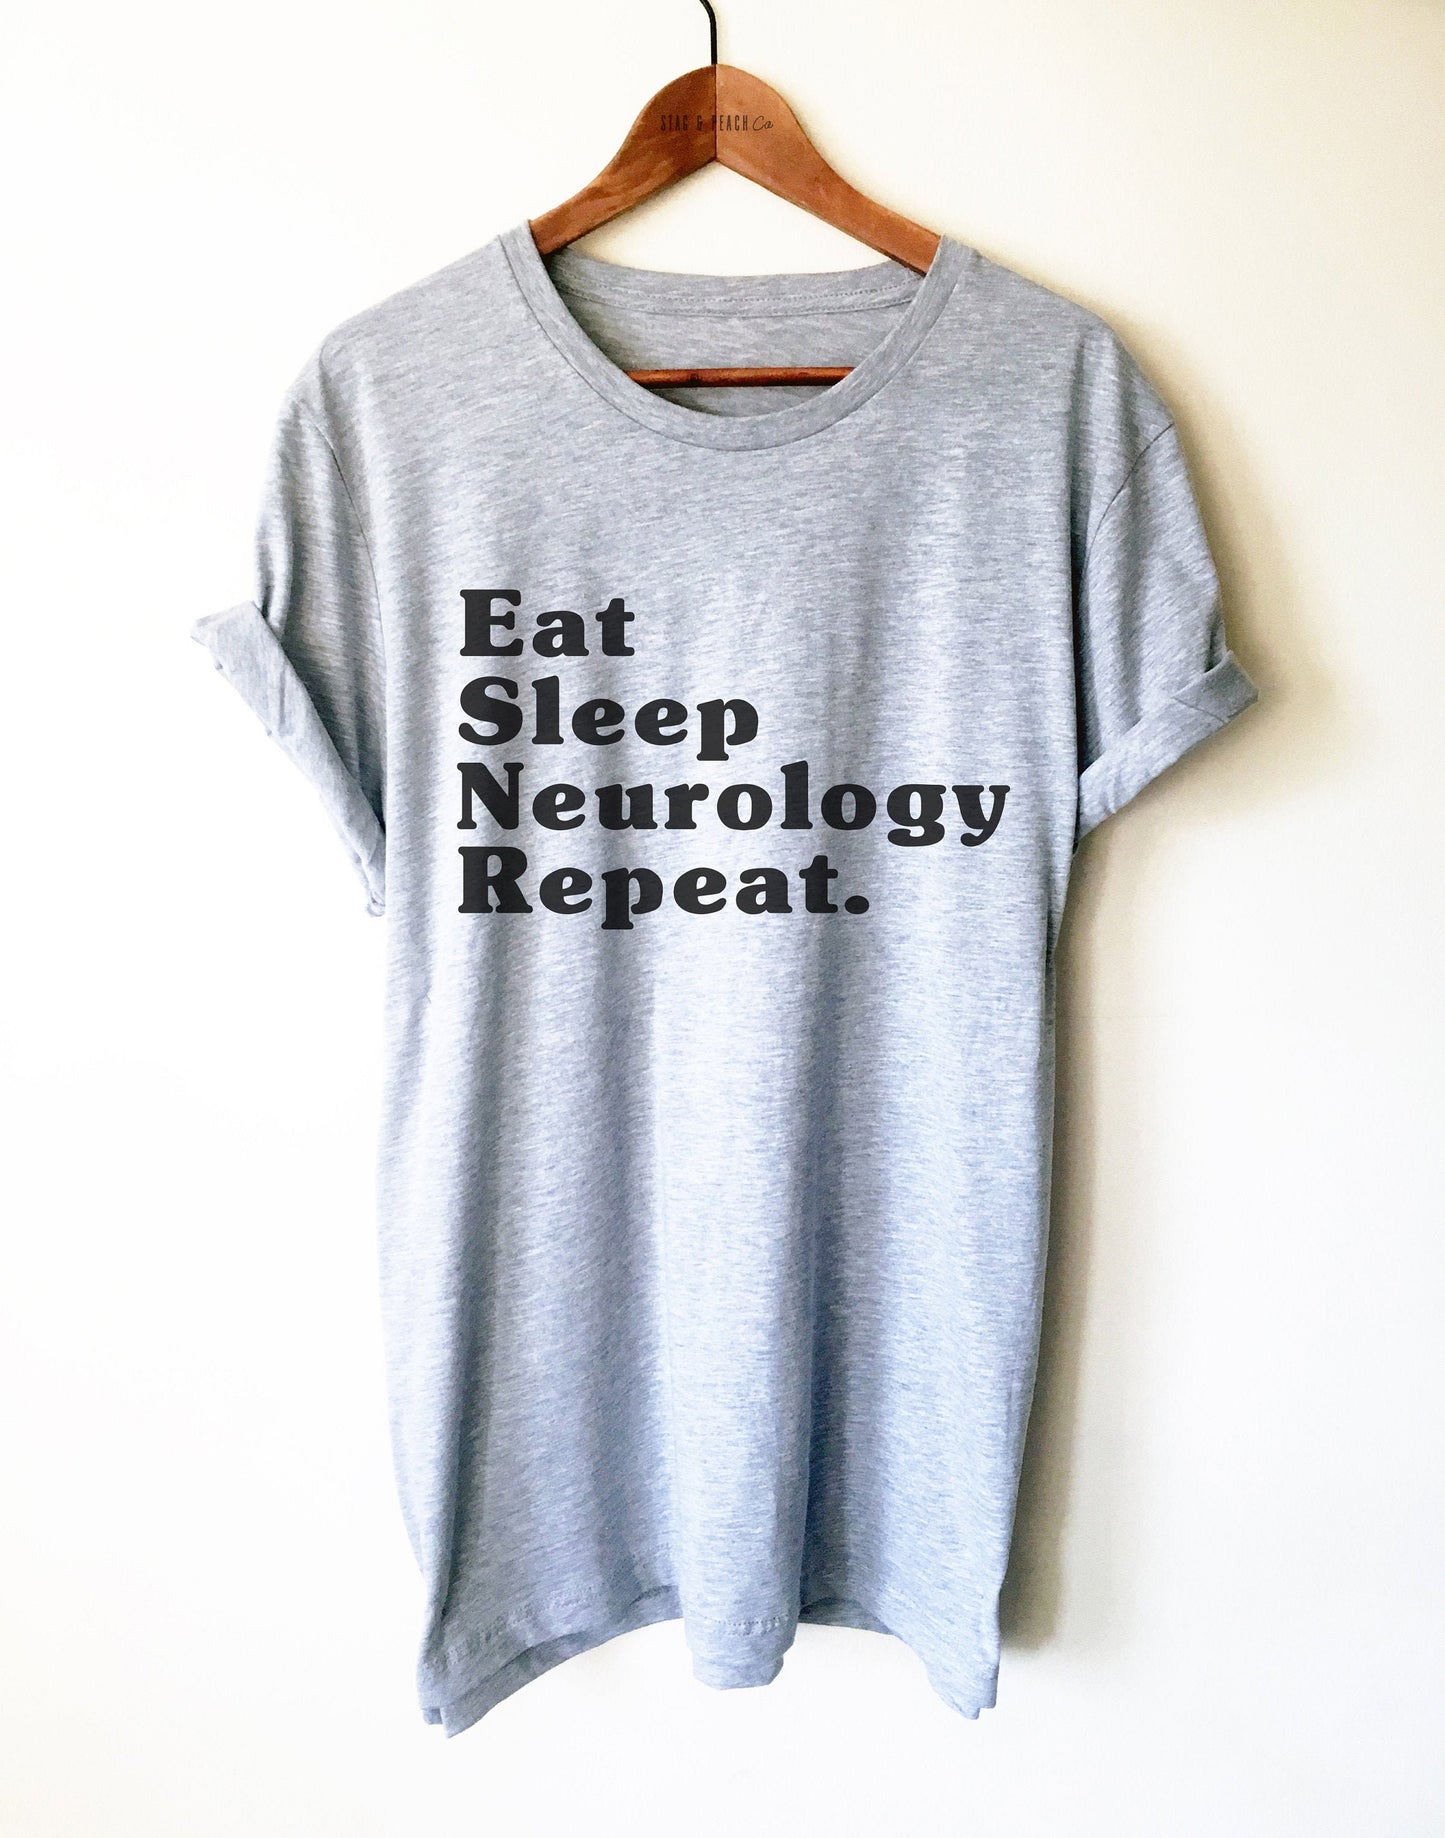 Funny Neurology Shirt/Tank Top/Hoodie - Neurologist Shirt, Neuro Nurse Shirt, Neuroscience Shirt, Neuro Tee, Eat Sleep Neurology Repeat